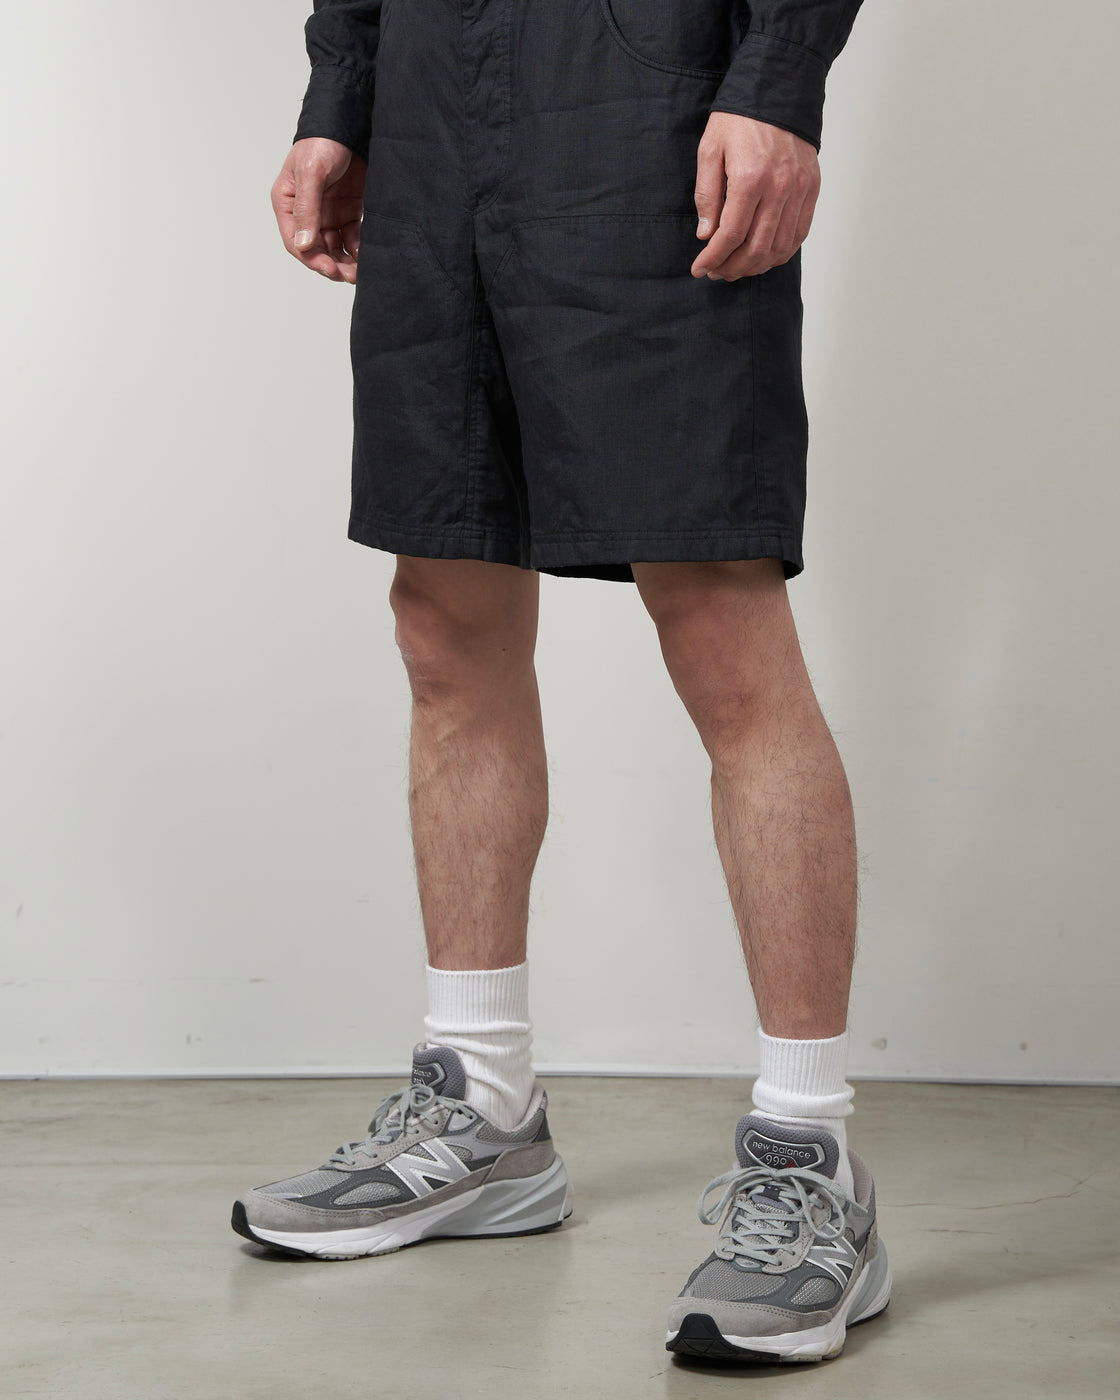 SH DKNS-004 Double Knee Shorts (Linen Garment DYE), Ink Black